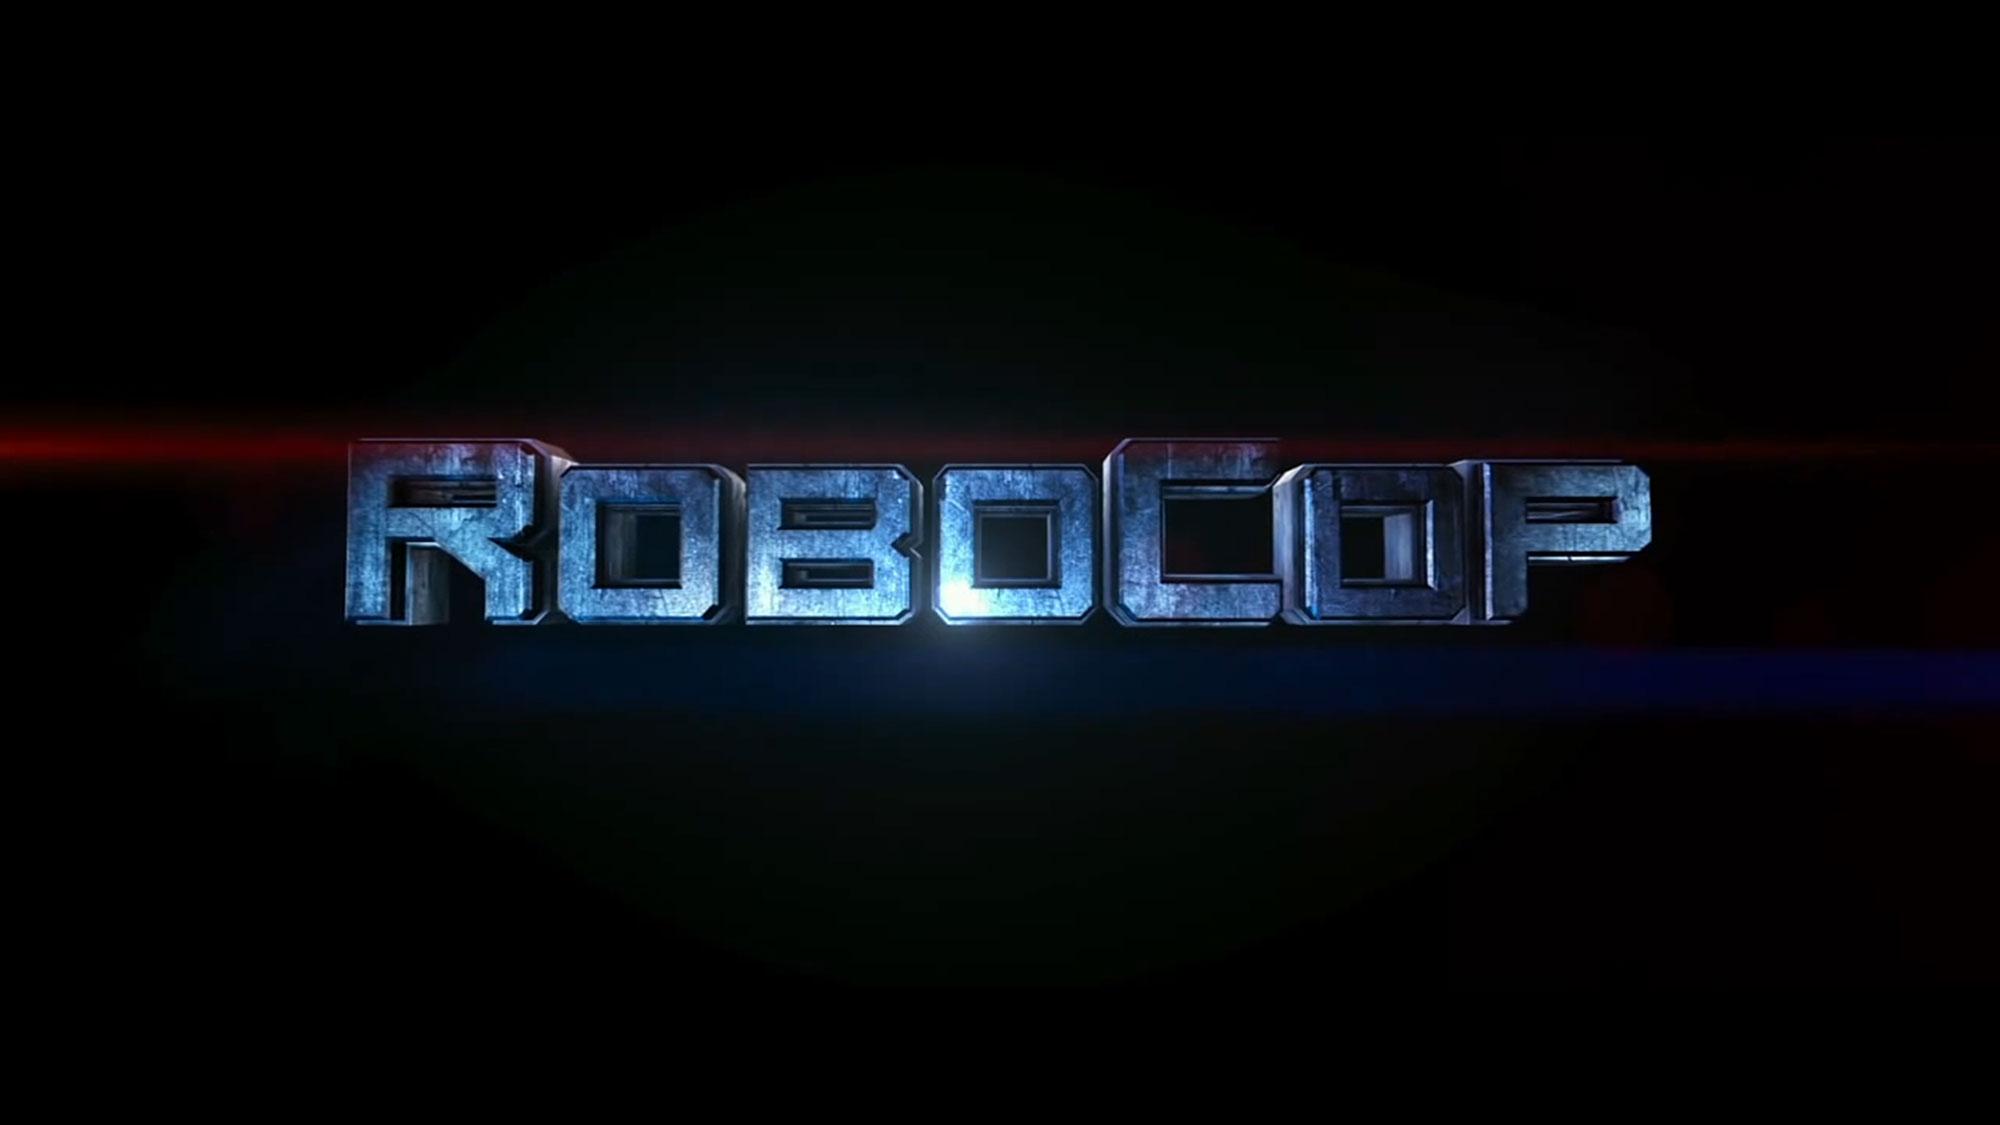 Robocop 2014 Movie Wallpaper [HD] & Facebook Timeline Covers